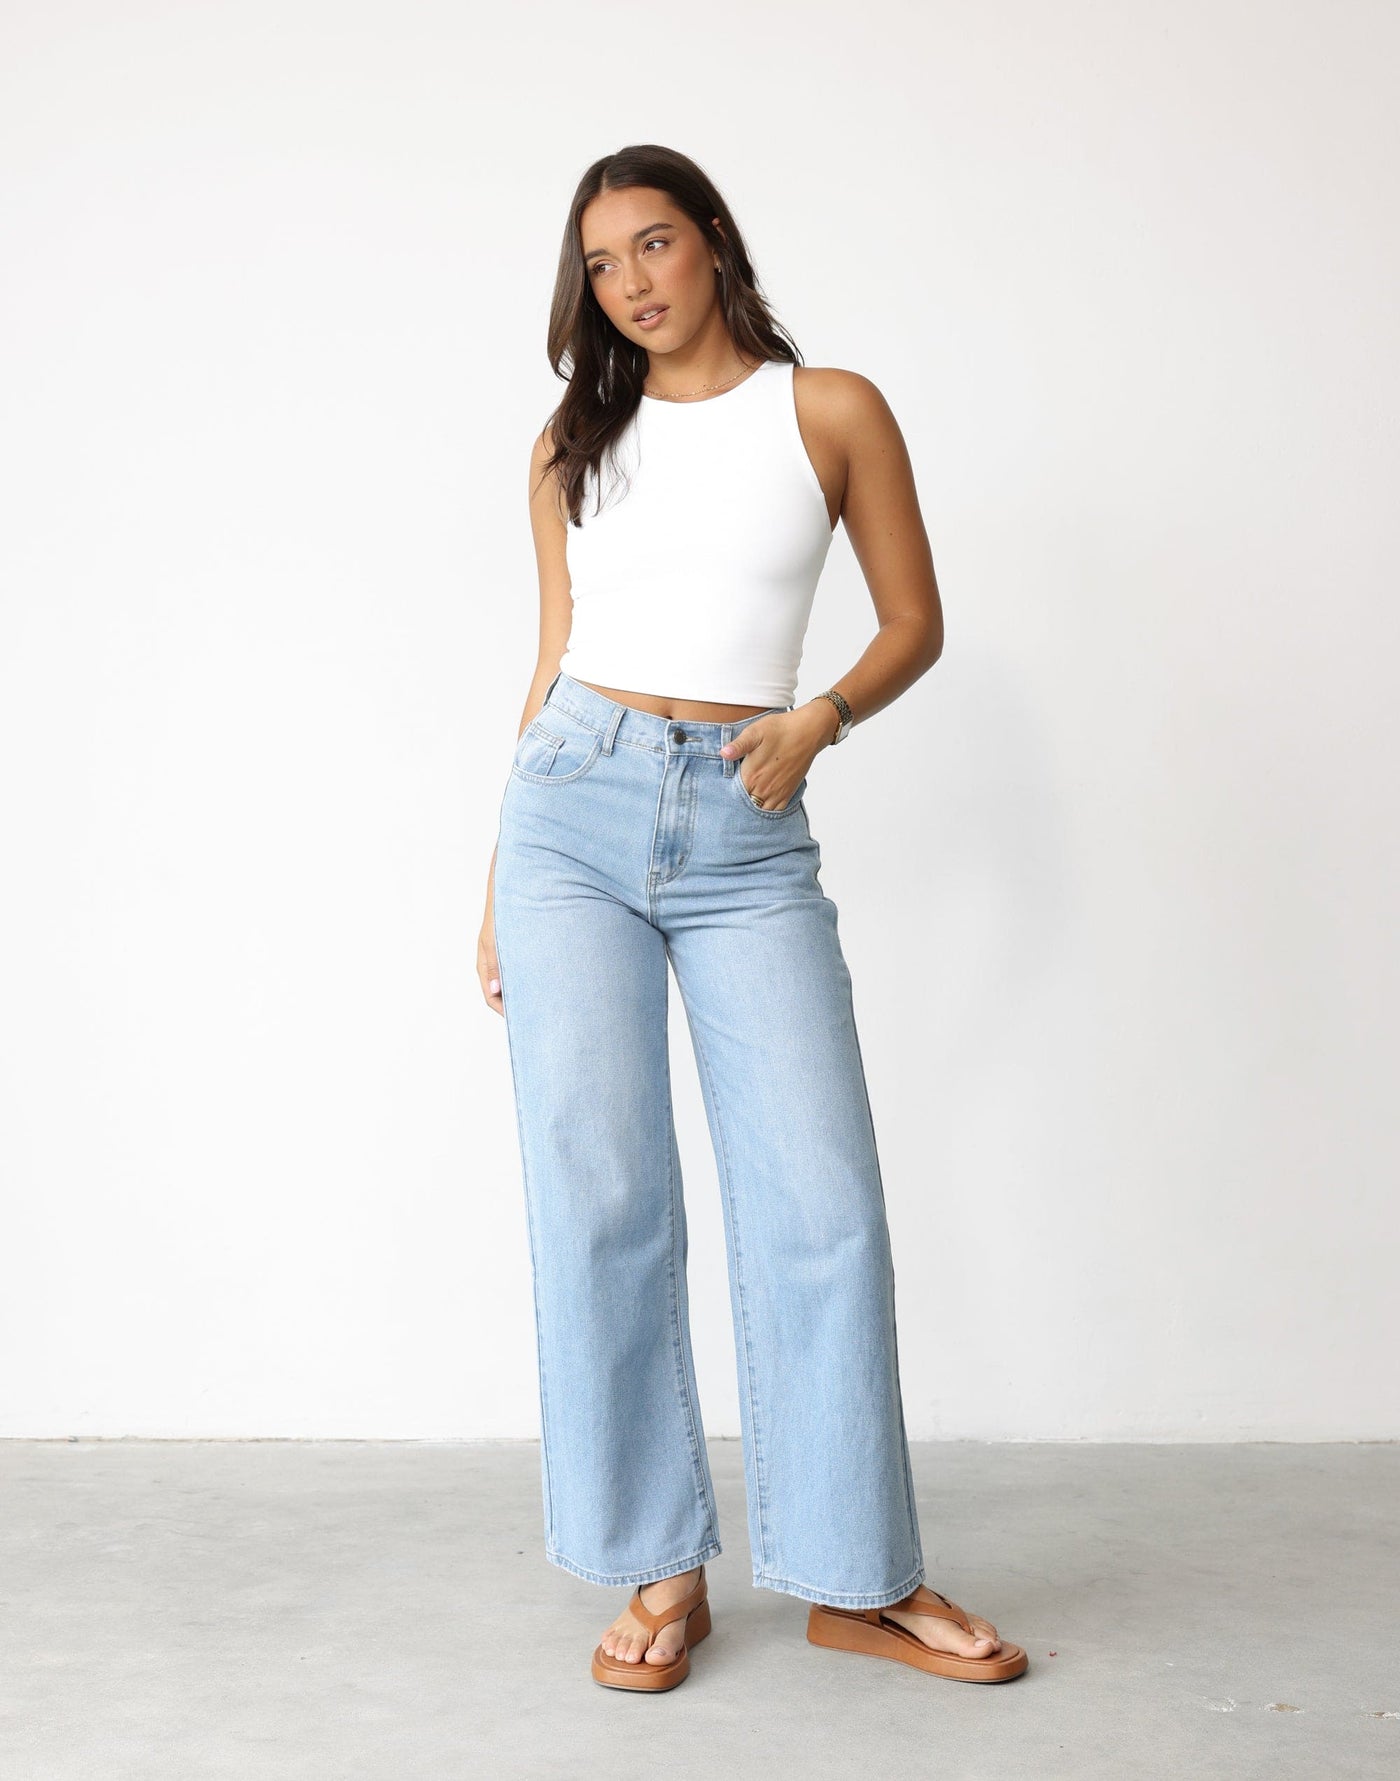 Tinah Jeans (Light Wash) - Mid Rise Wide Leg Jeans - Women's Pants - Charcoal Clothing